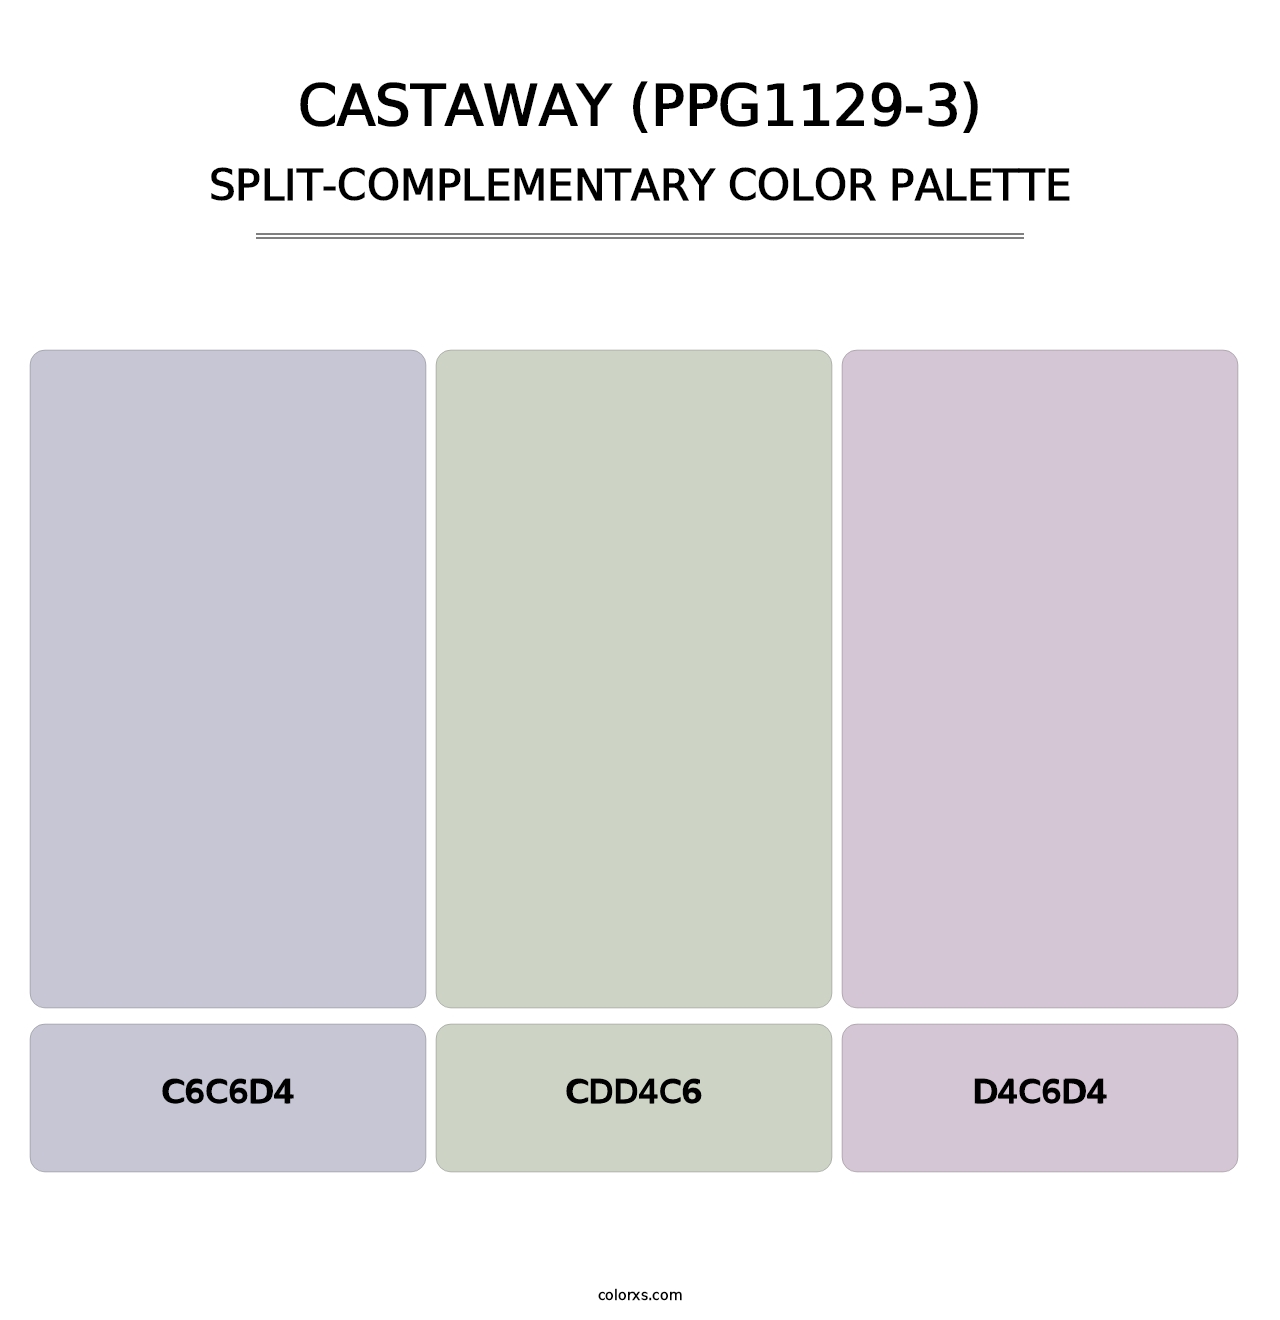 Castaway (PPG1129-3) - Split-Complementary Color Palette